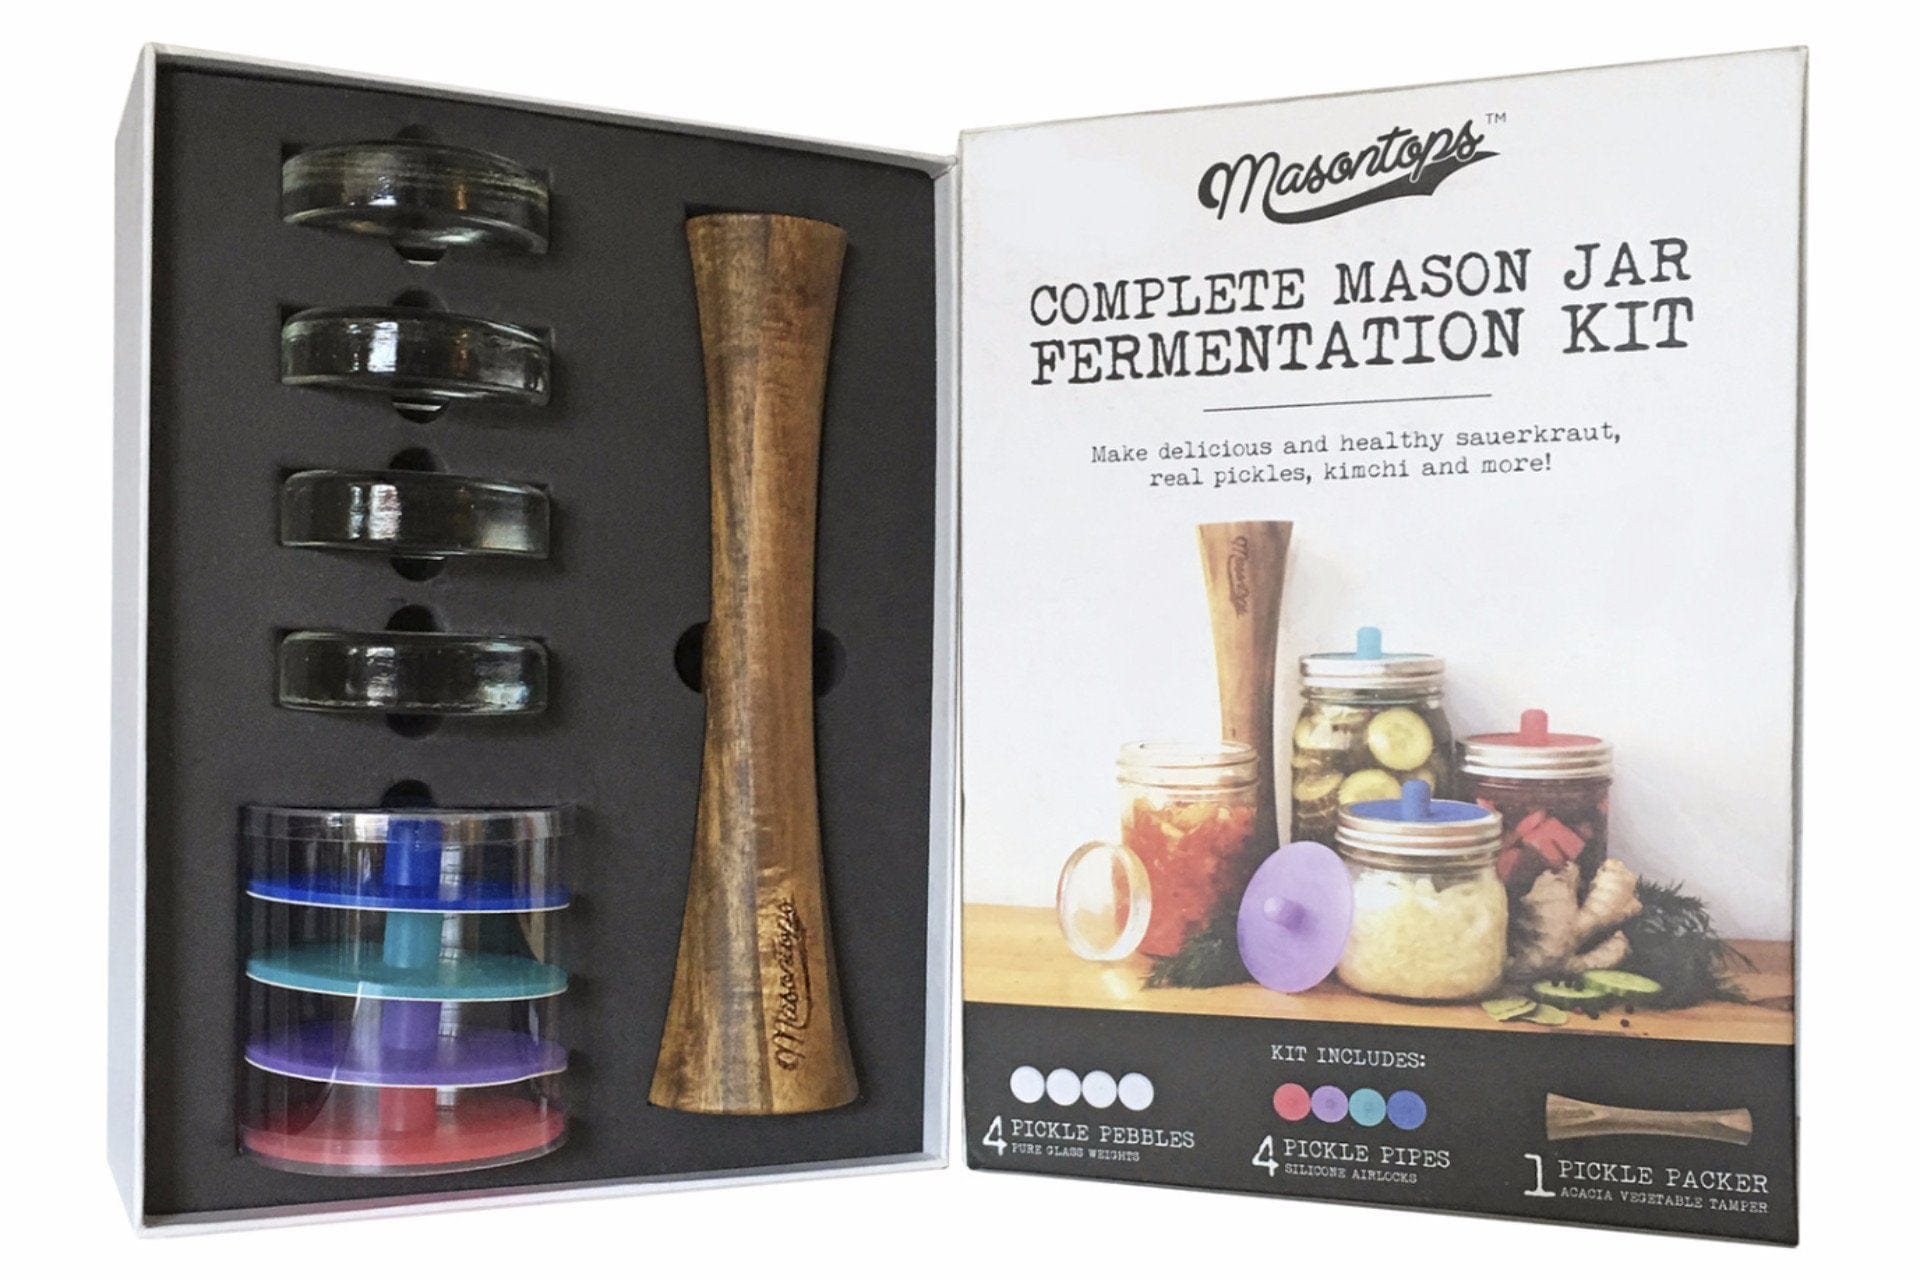 A Complete Mason Jar Fermentation Kit (9 Piece Set) in its original packaging